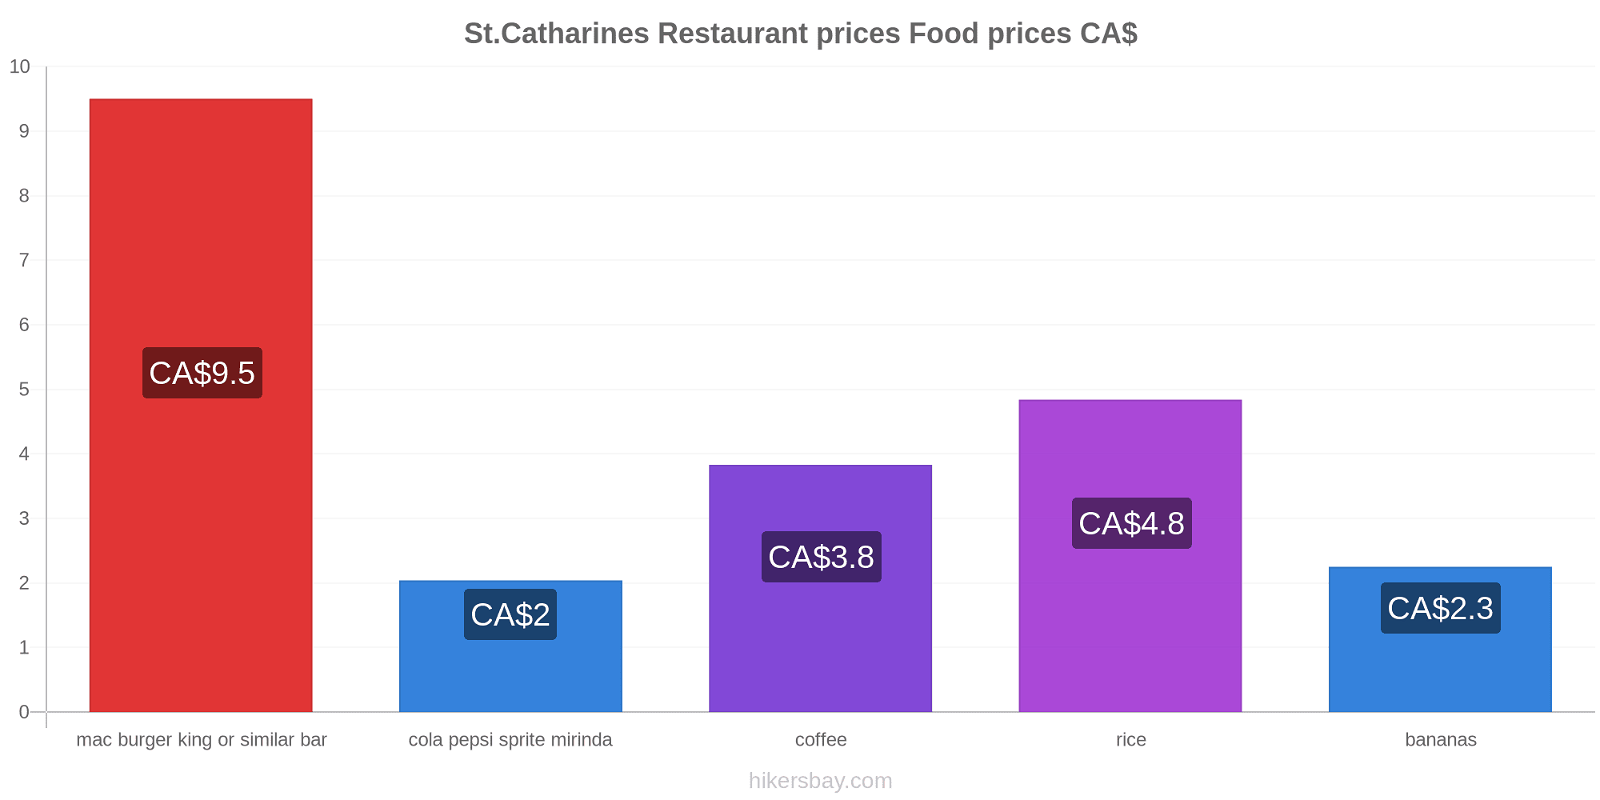 St.Catharines price changes hikersbay.com